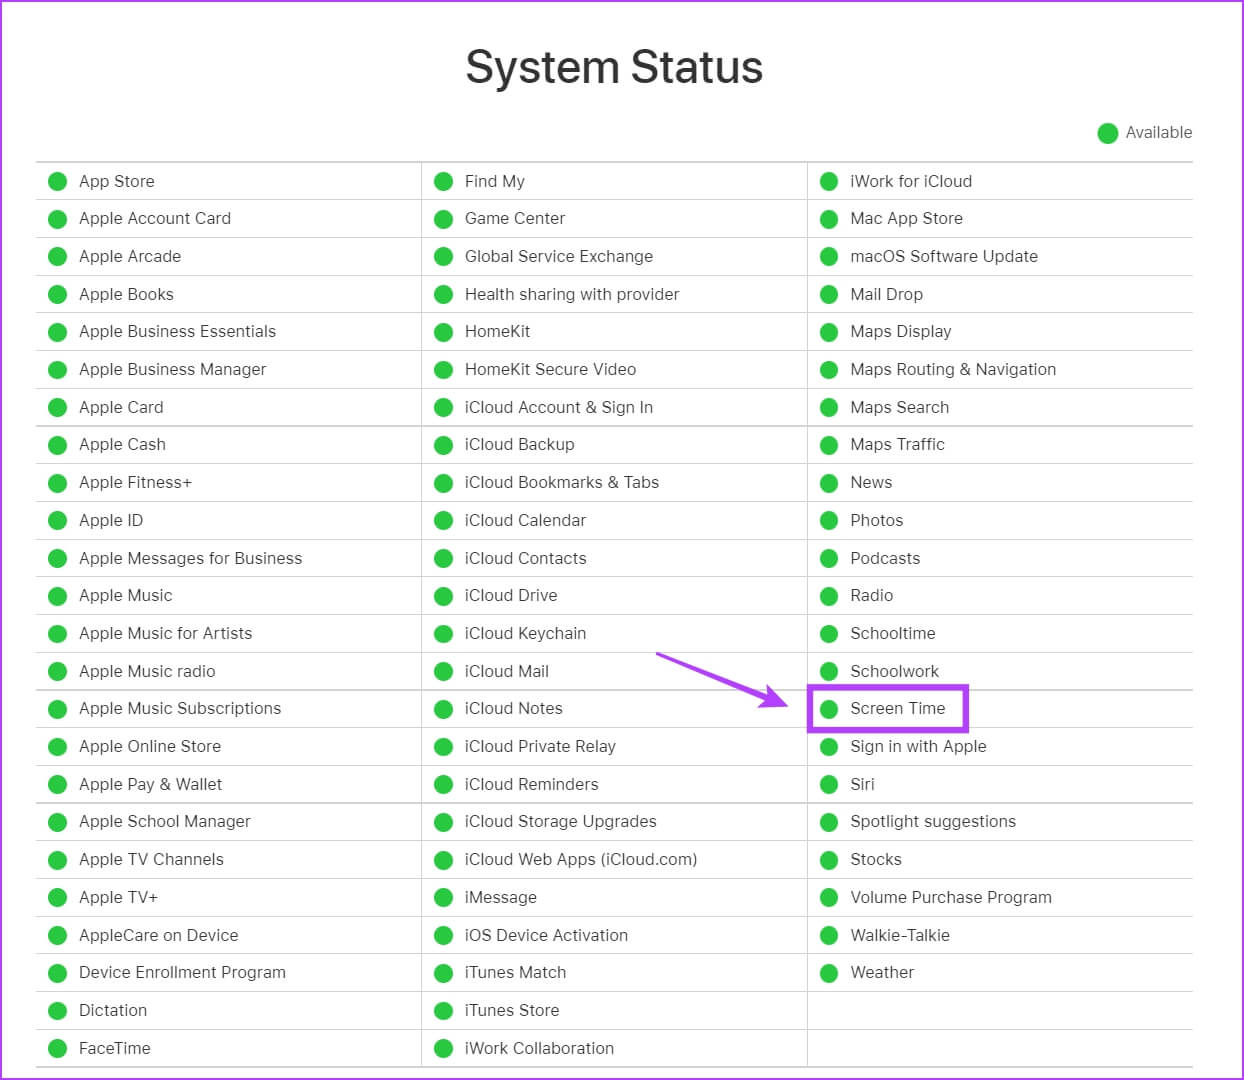 أفضل 10 إصلاحات للعدم ظهور بيانات Screen Time على iPhone - %categories